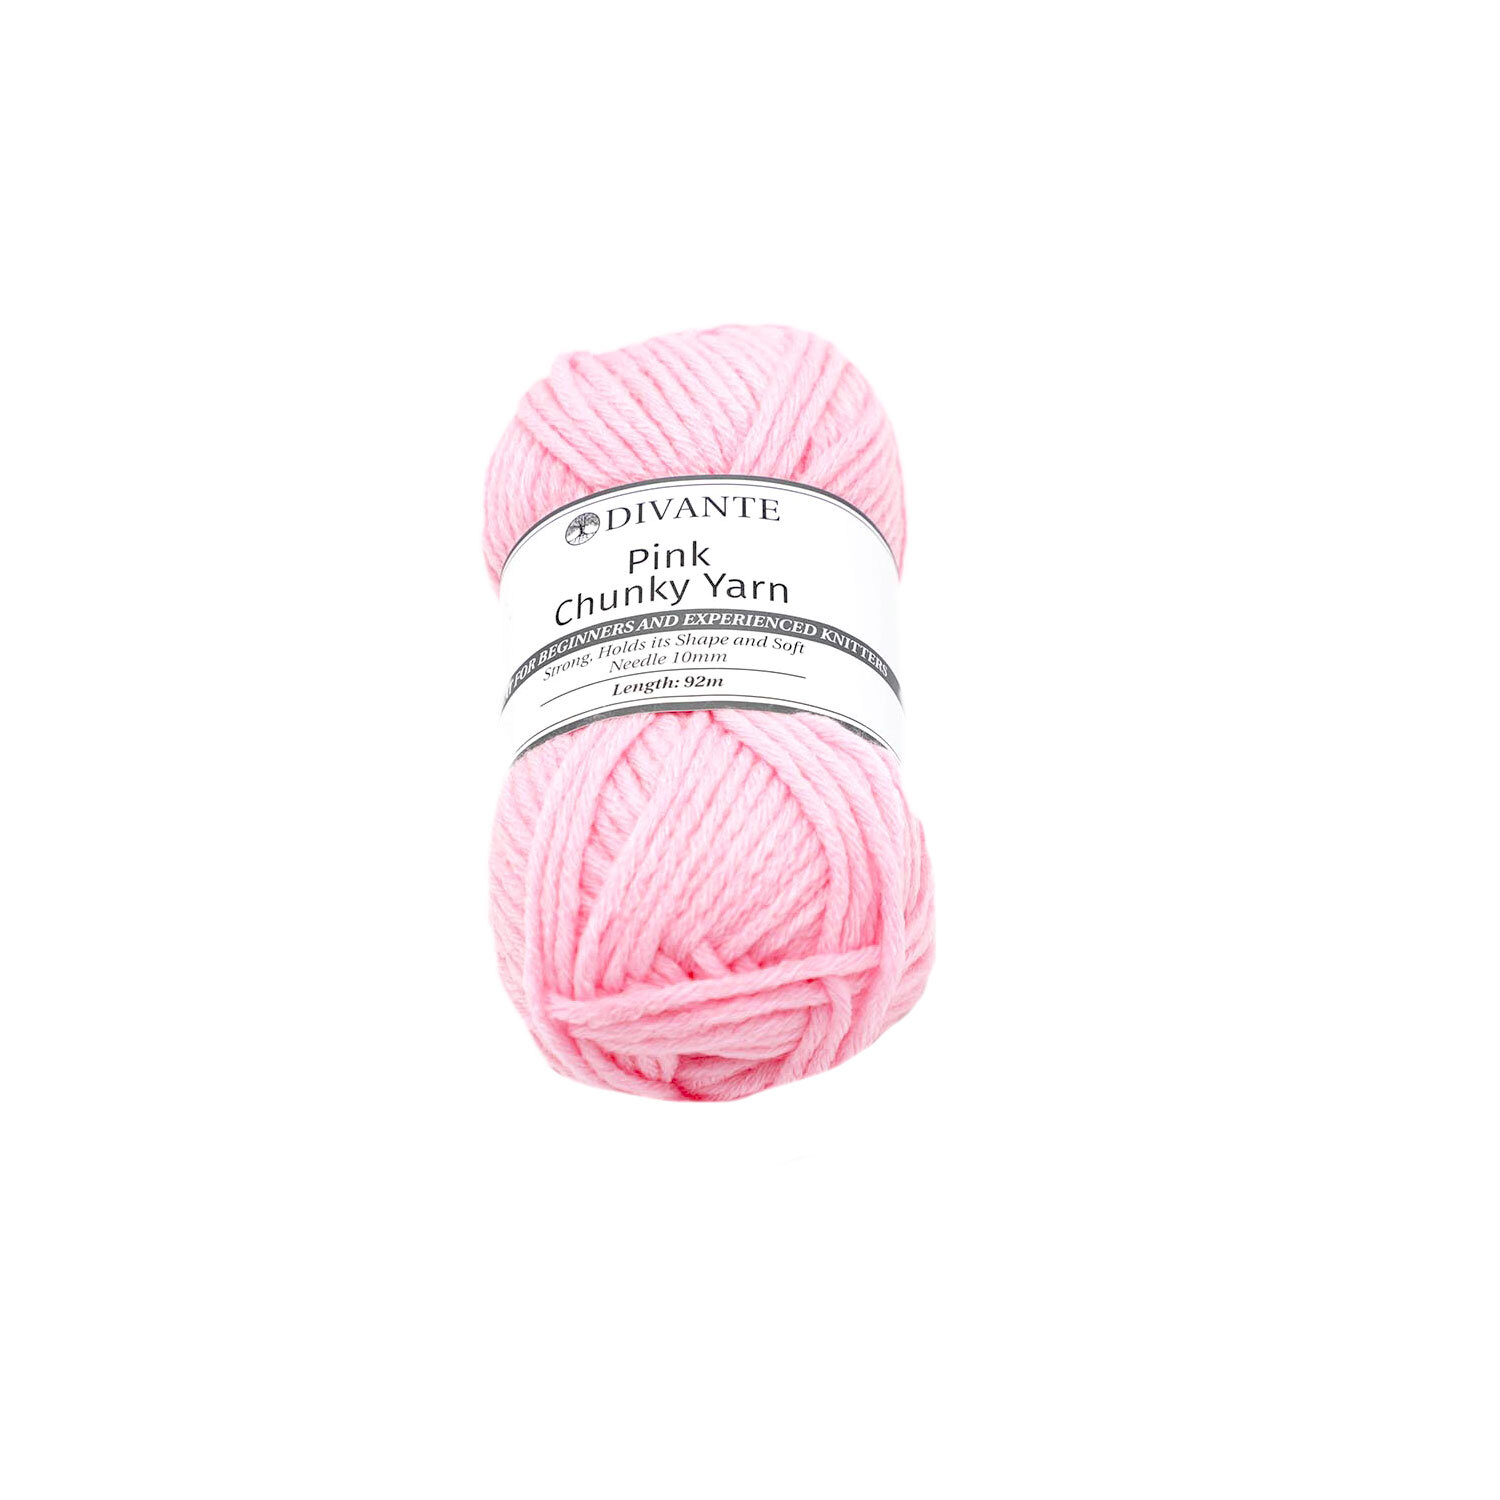 Divante Pink Chunky Yarn 100g Image